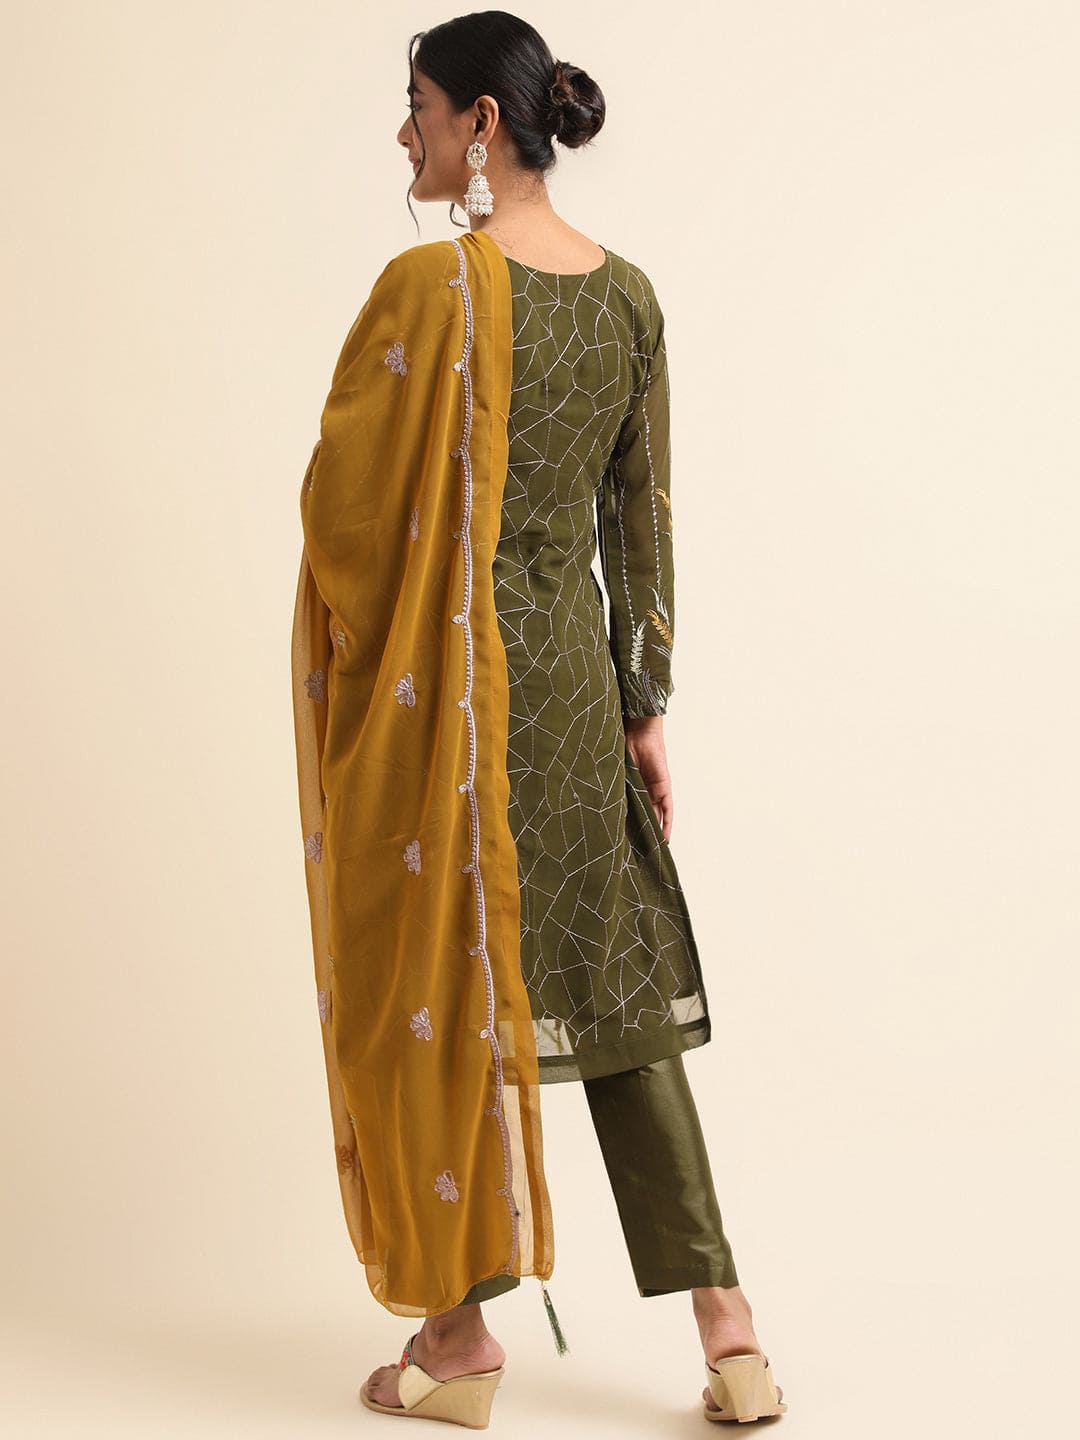 Embrace Elegance with Green Pakistani Suit Design